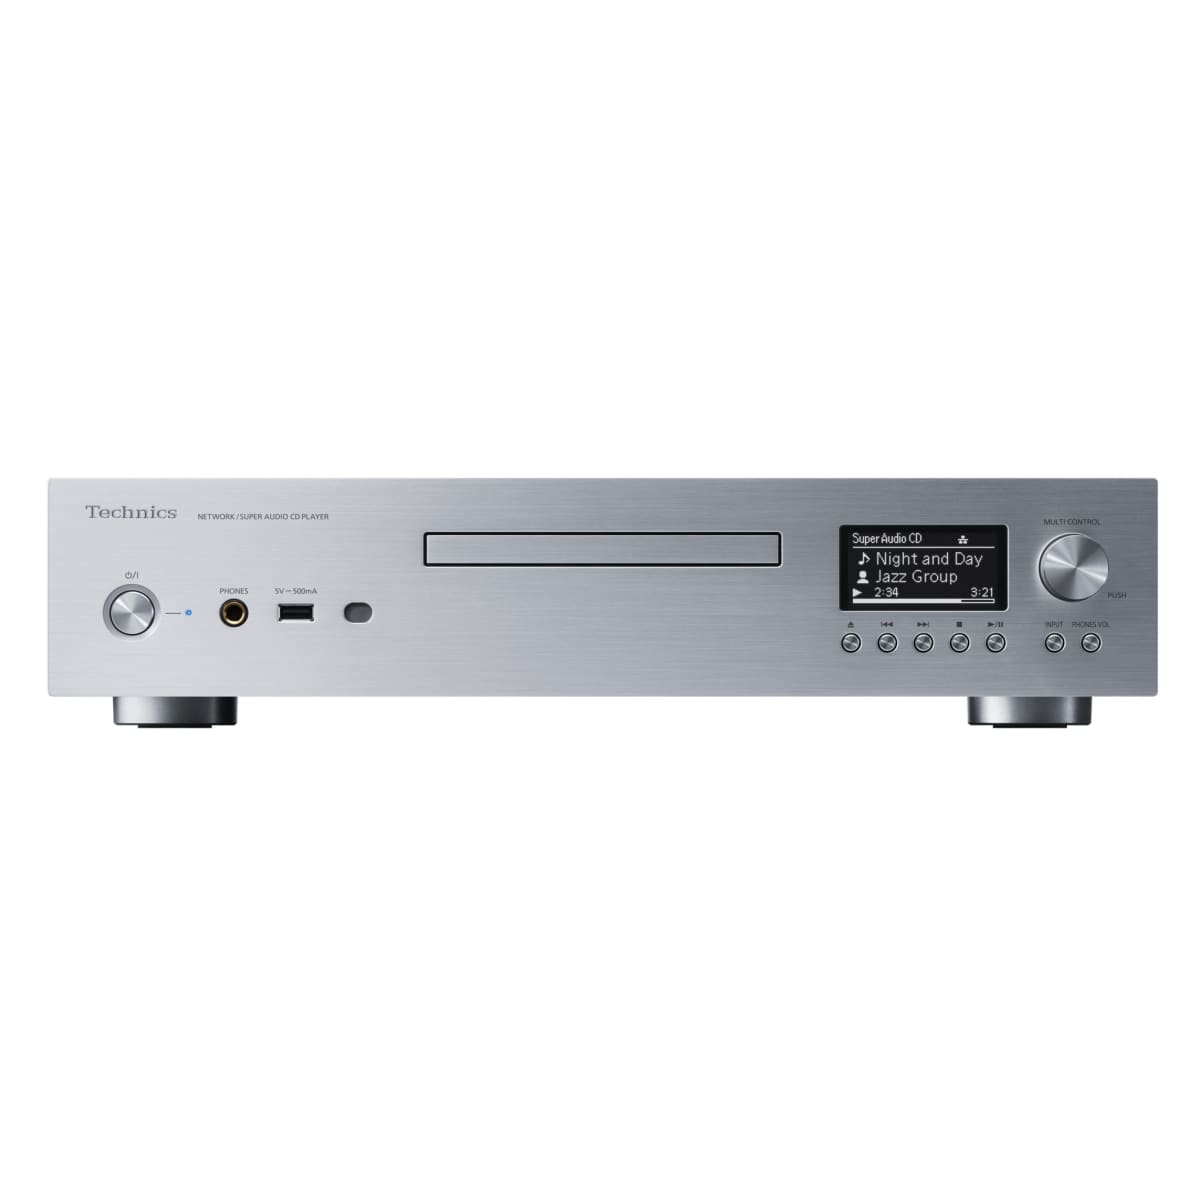 Network / Super Audio Cd Player Sl-G700 Silver + Digital